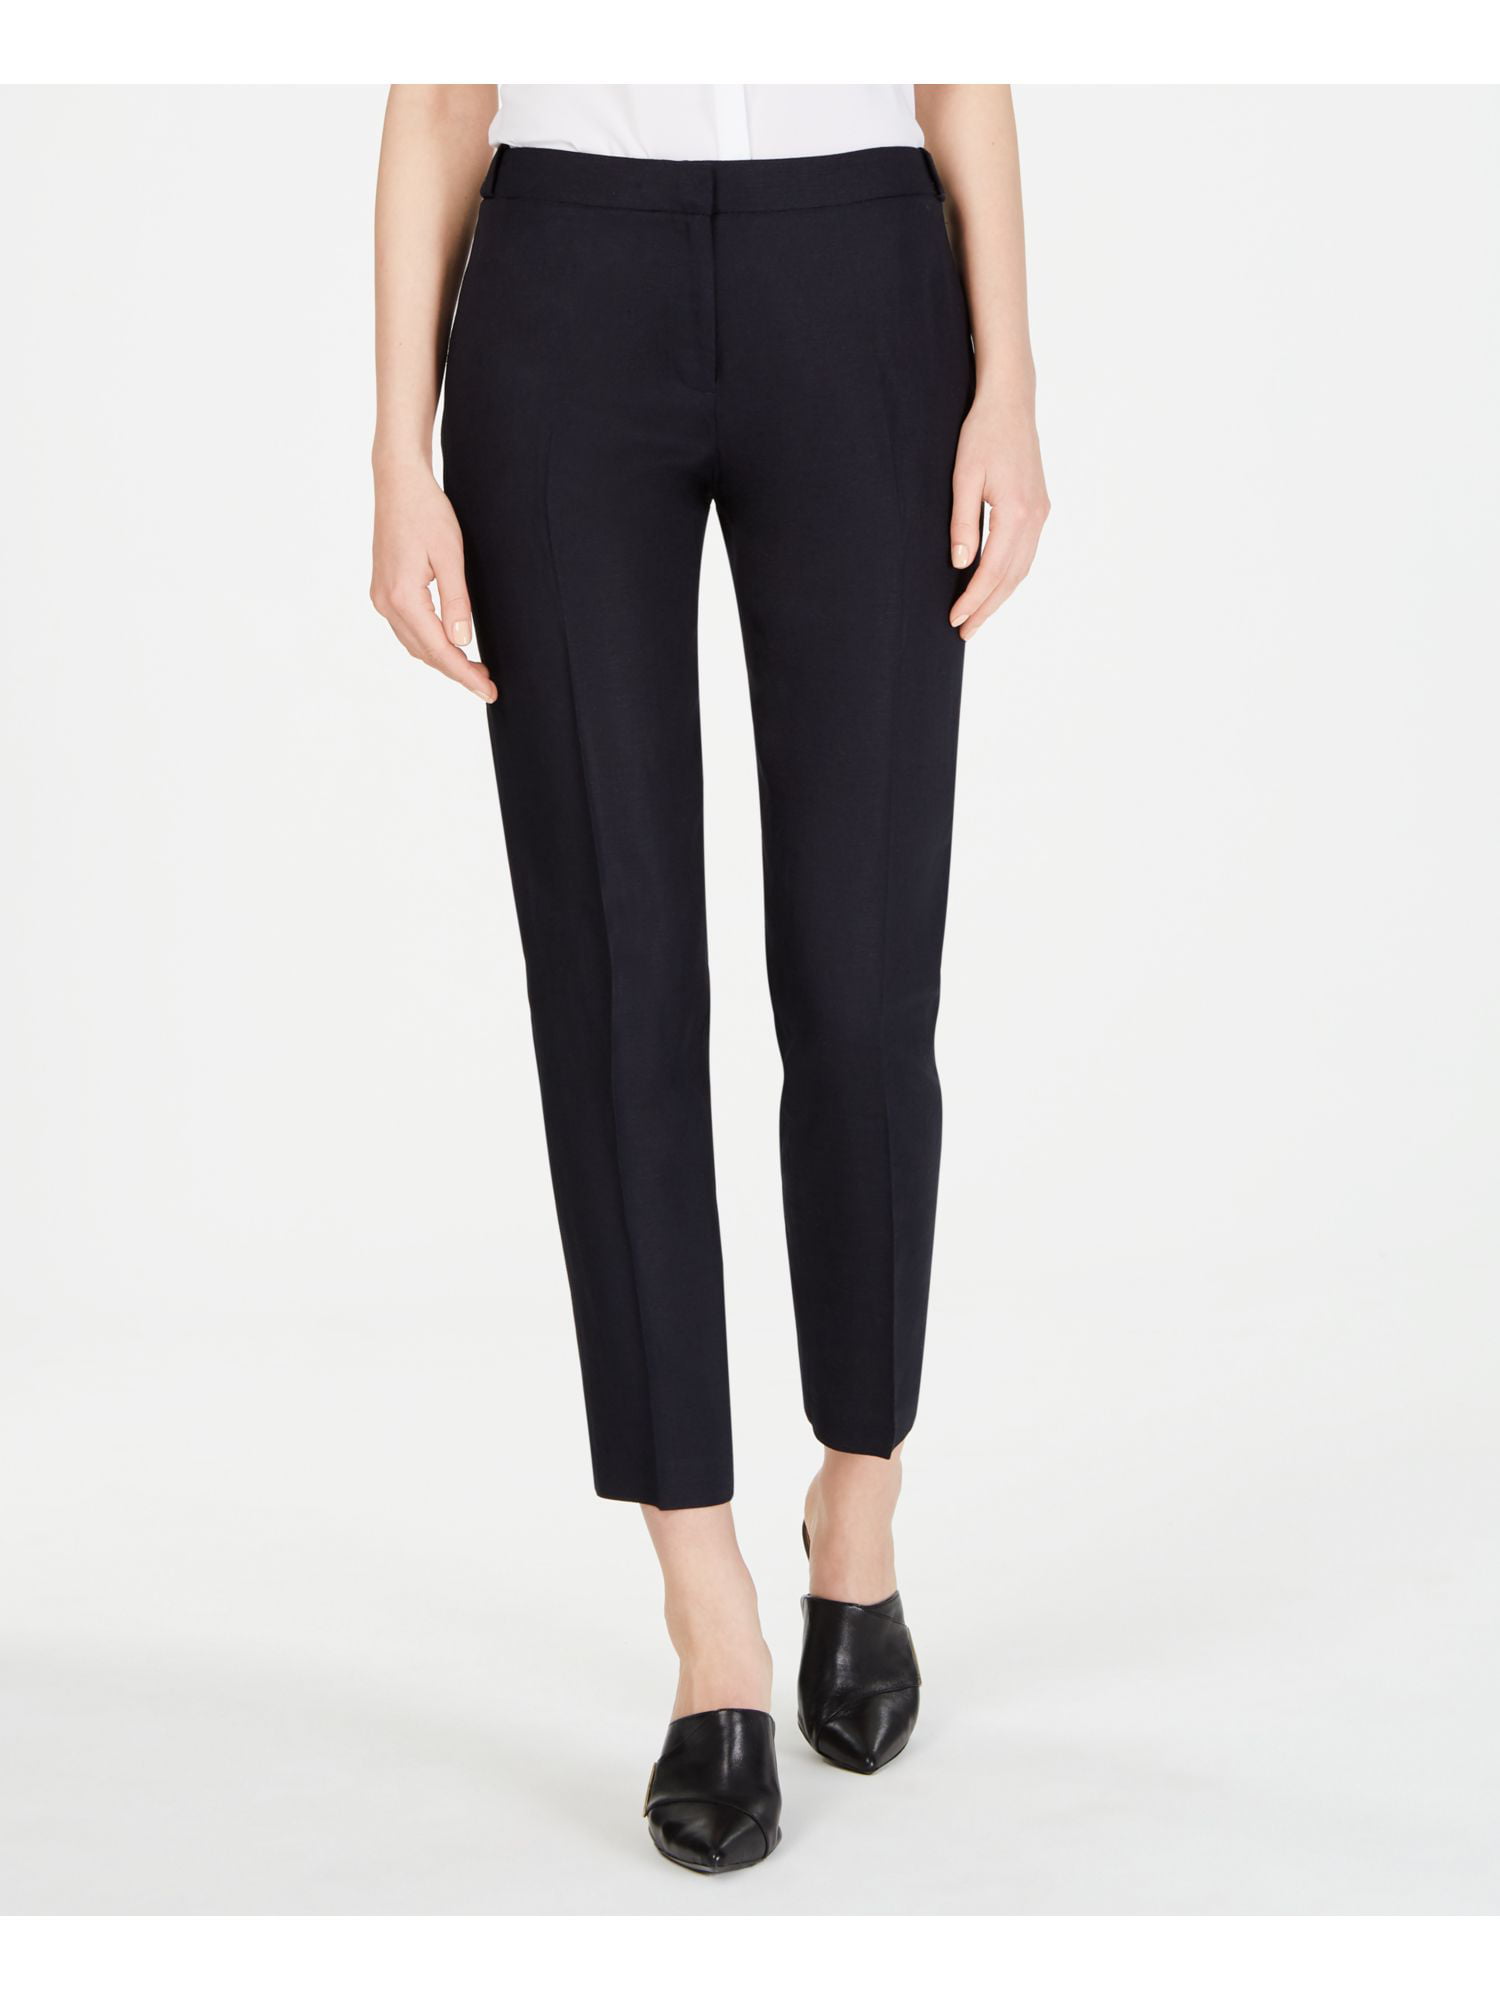 Calvin Klein - CALVIN KLEIN Womens Navy Pants Size 8P - Walmart.com ...